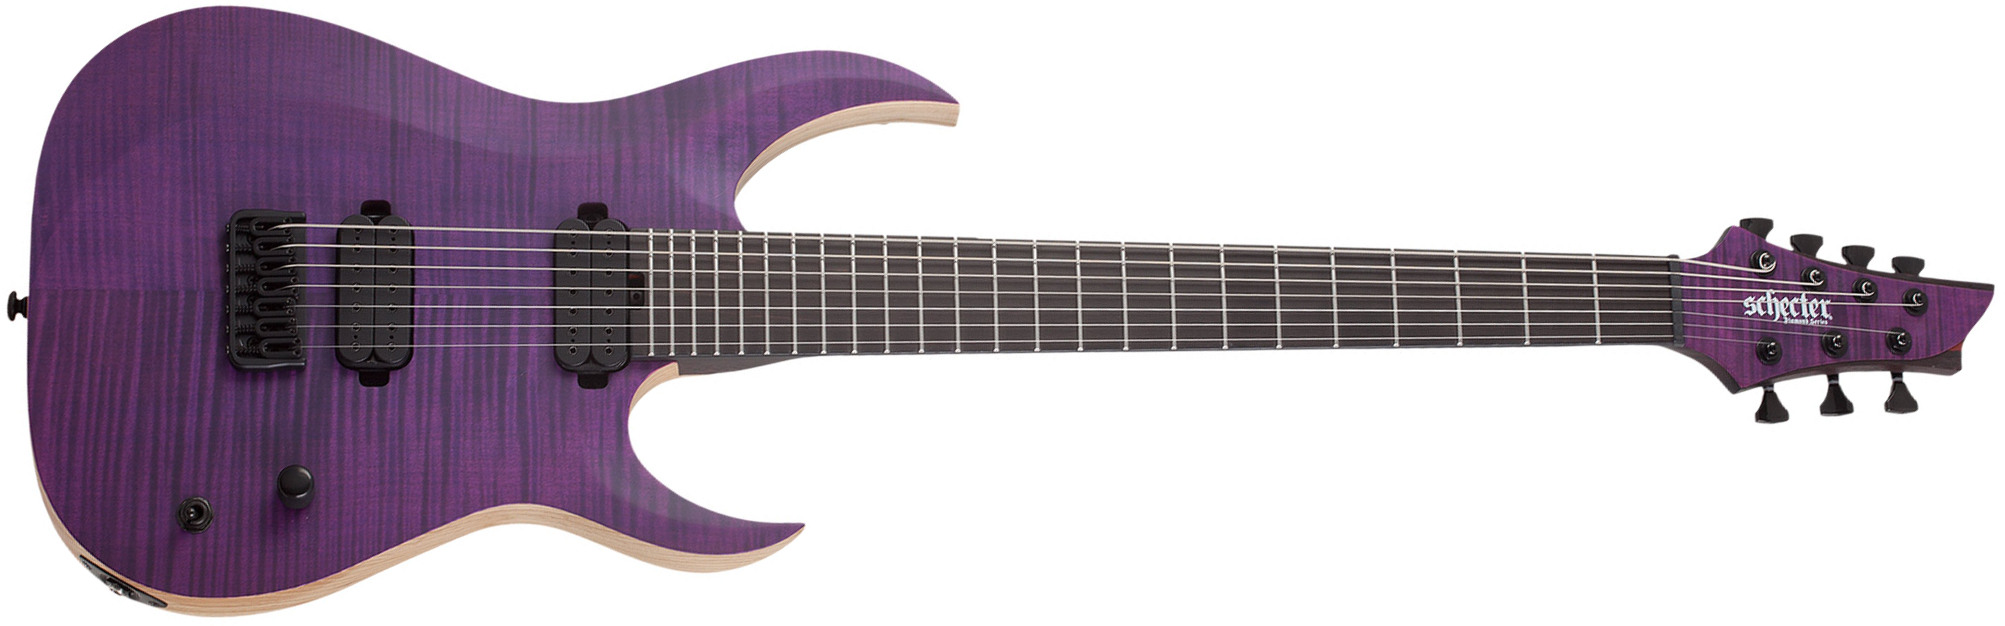 Schecter John Browne Tao-7 Signature Baryton 2h Ht Eb - Satin Trans Purple - 7 string electric guitar - Main picture